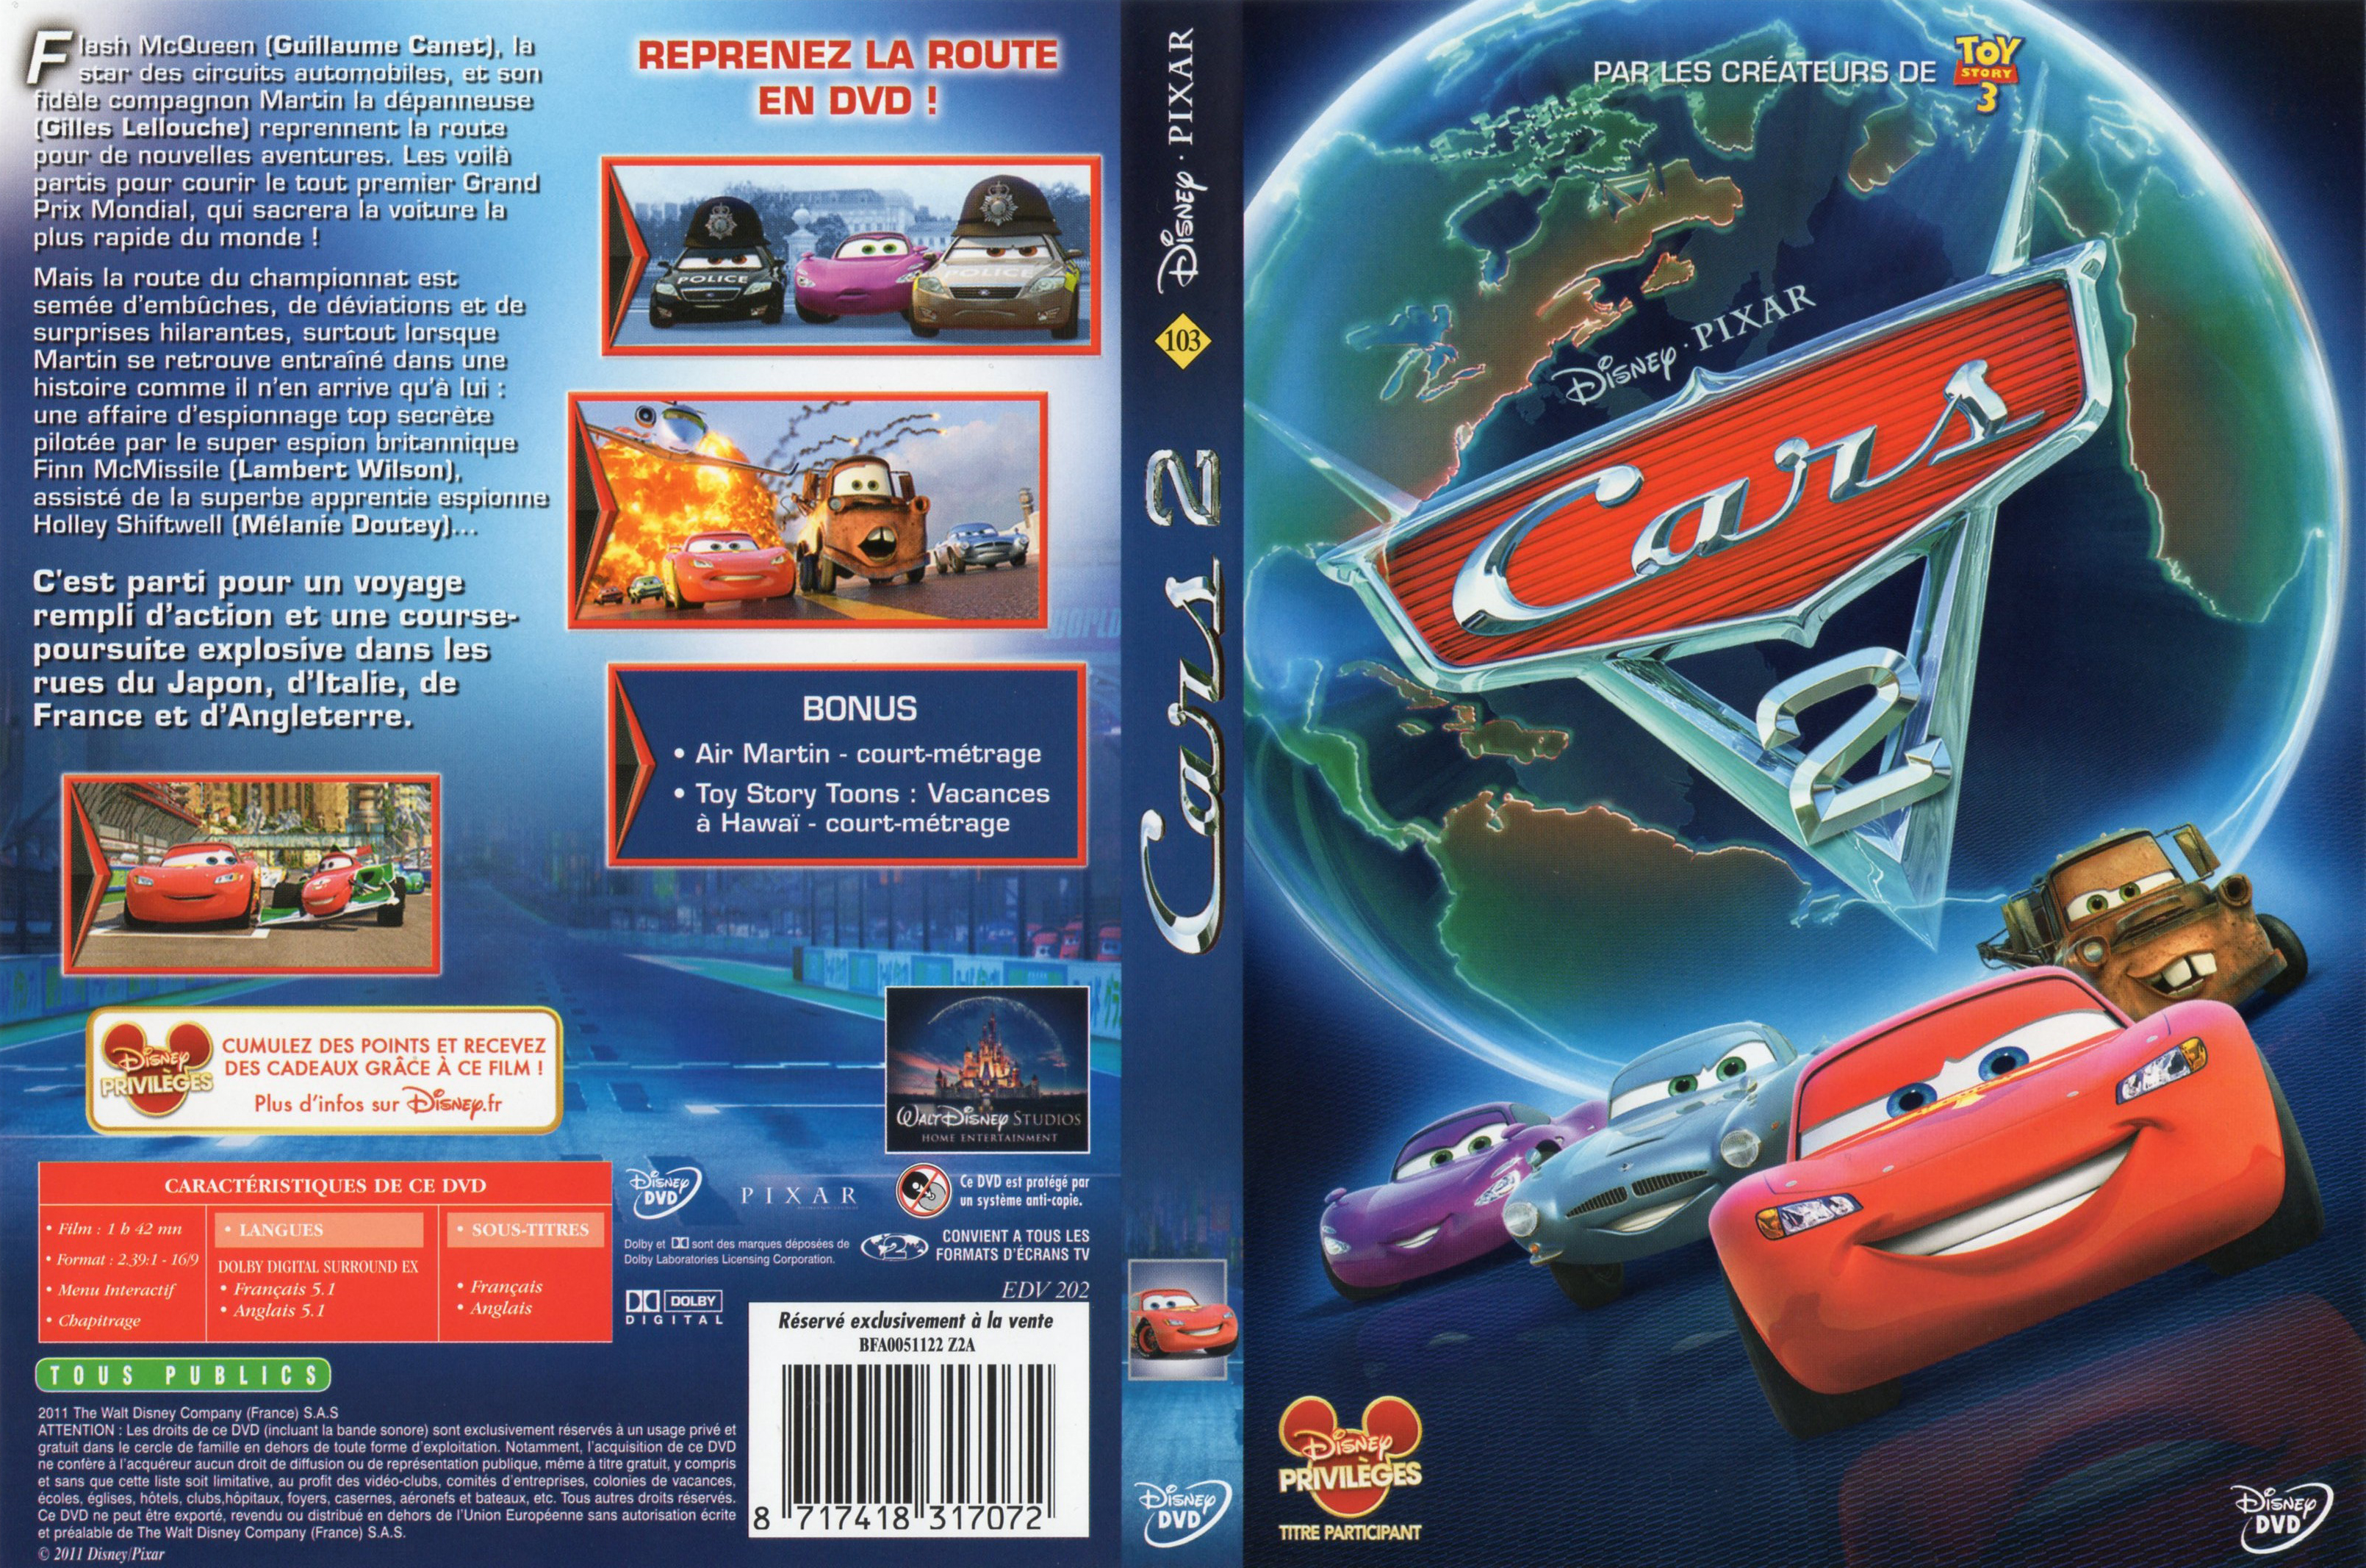 Jaquette DVD Cars 2